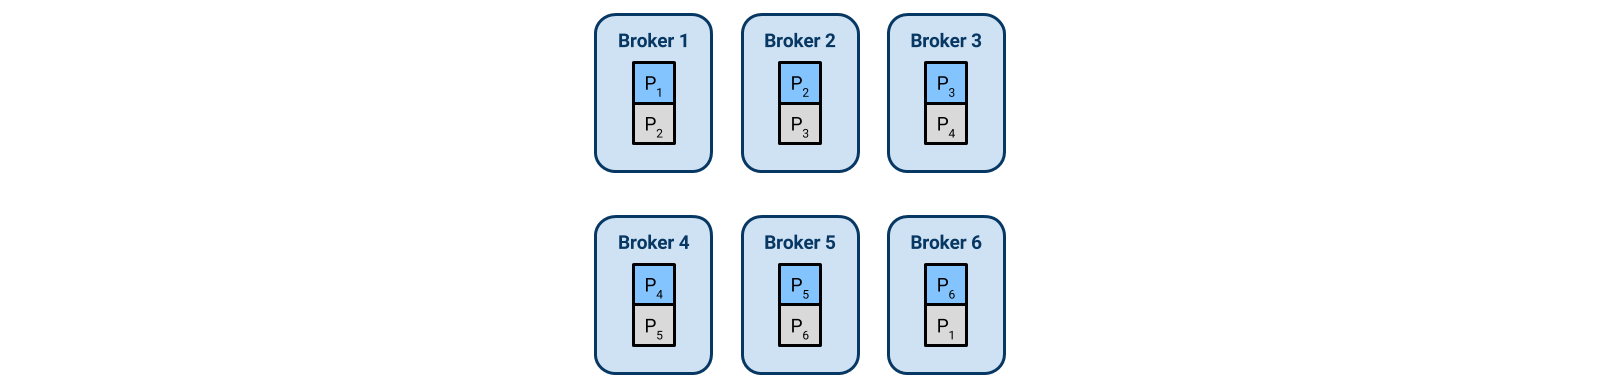 Six-broker Kafka cluster